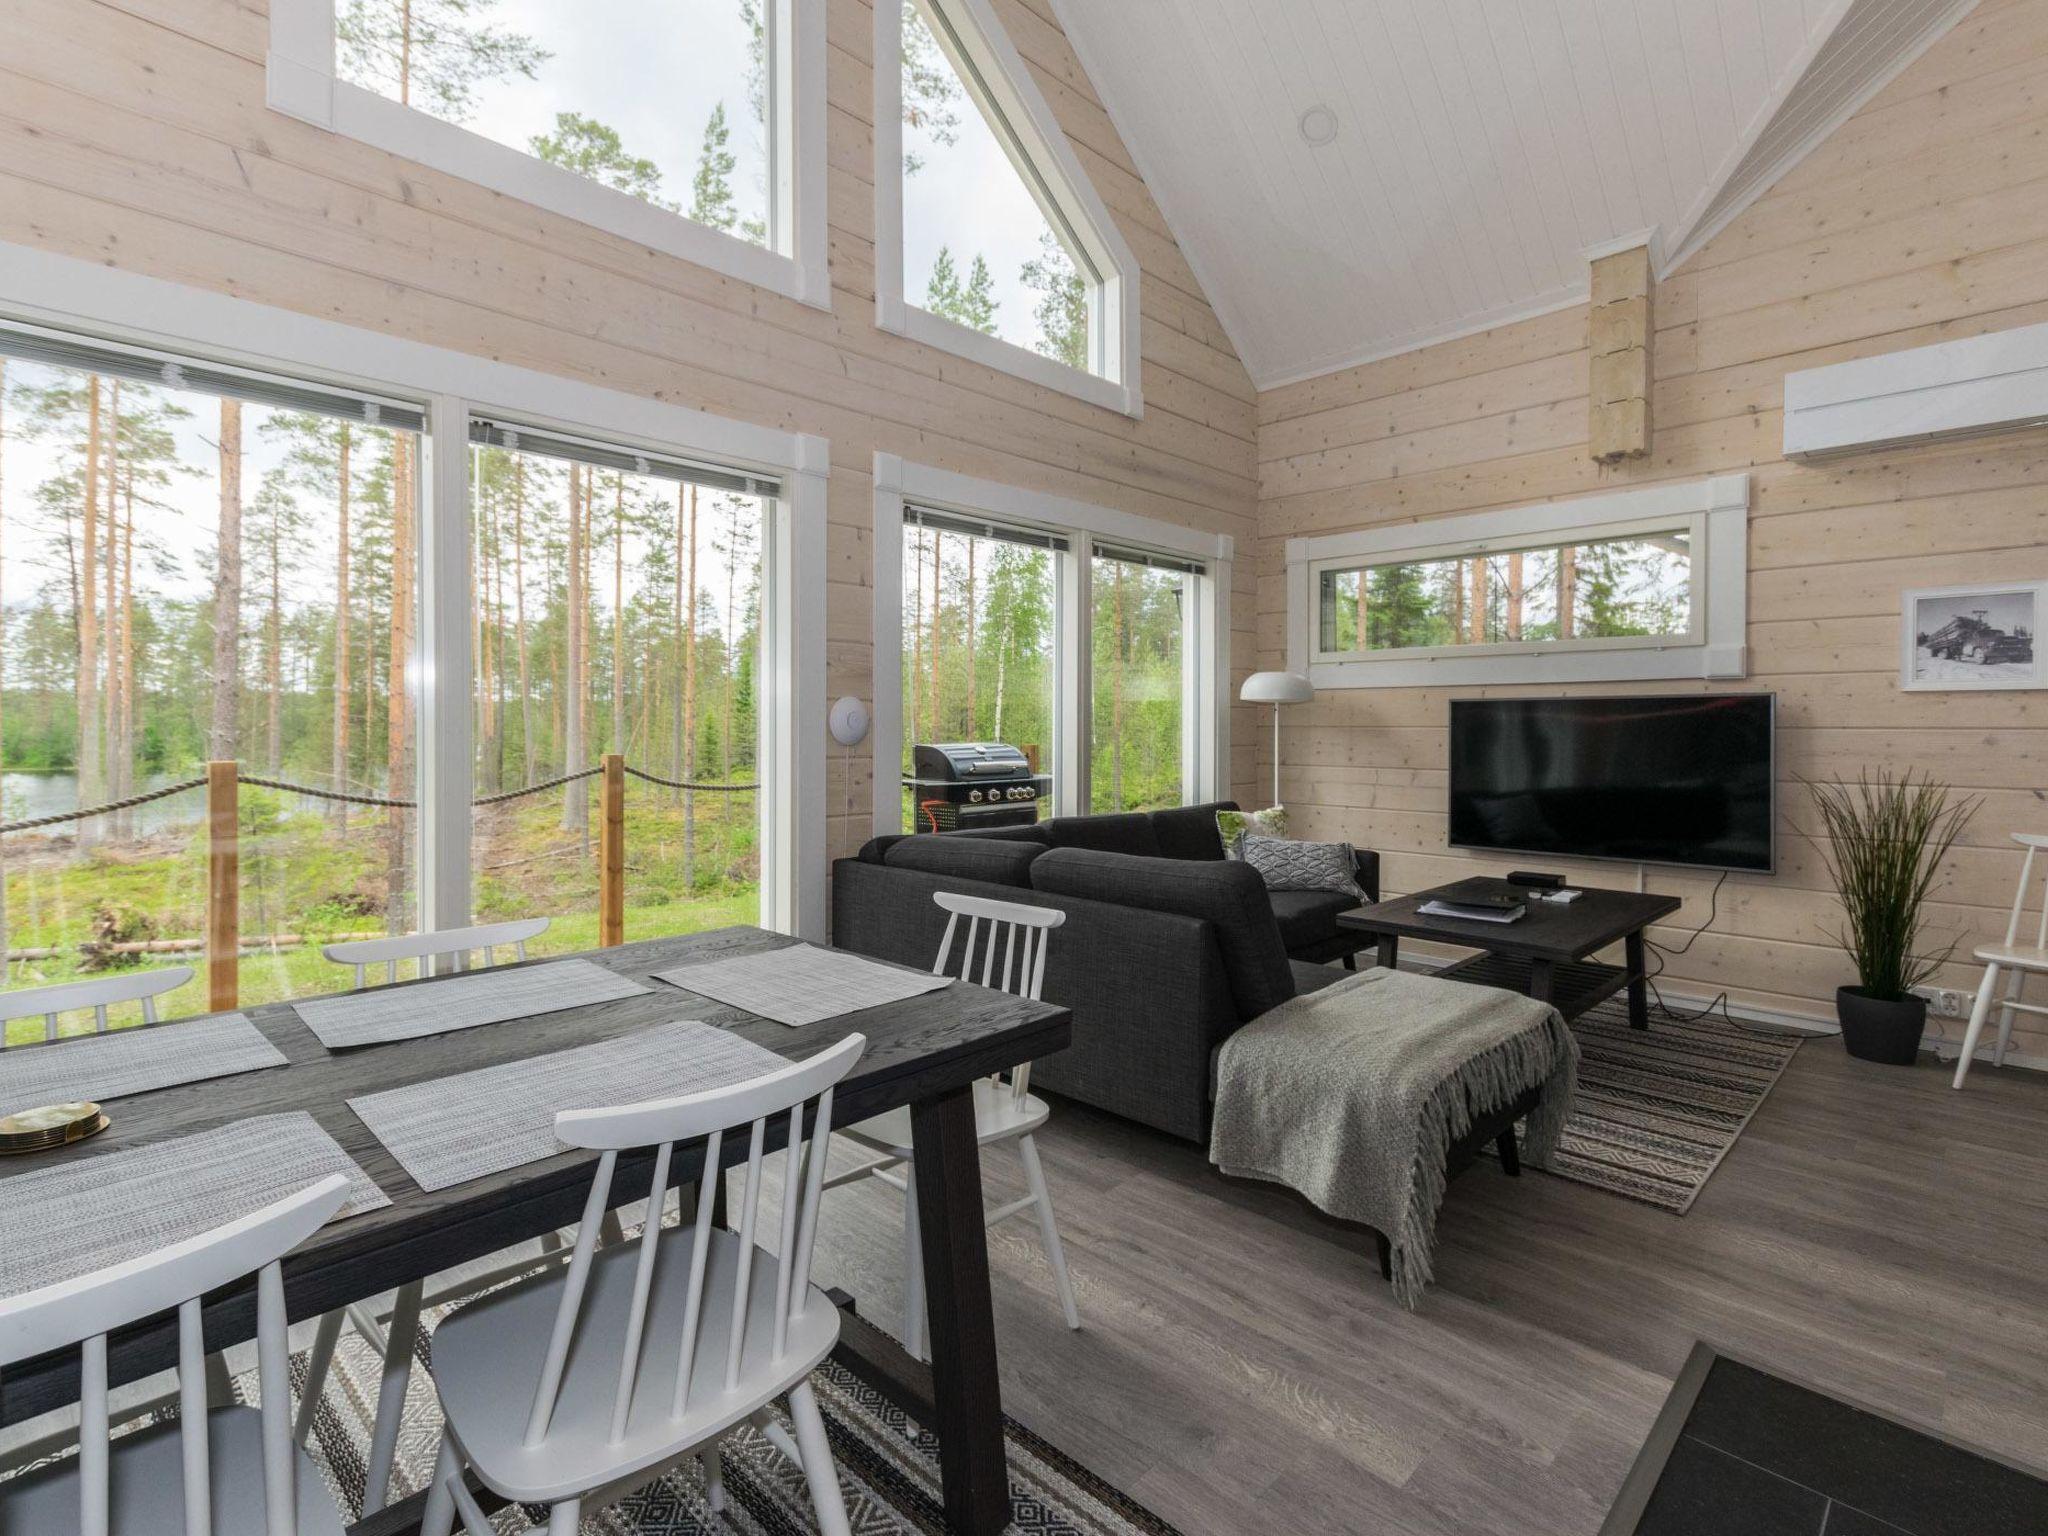 Photo 5 - 4 bedroom House in Sonkajärvi with sauna